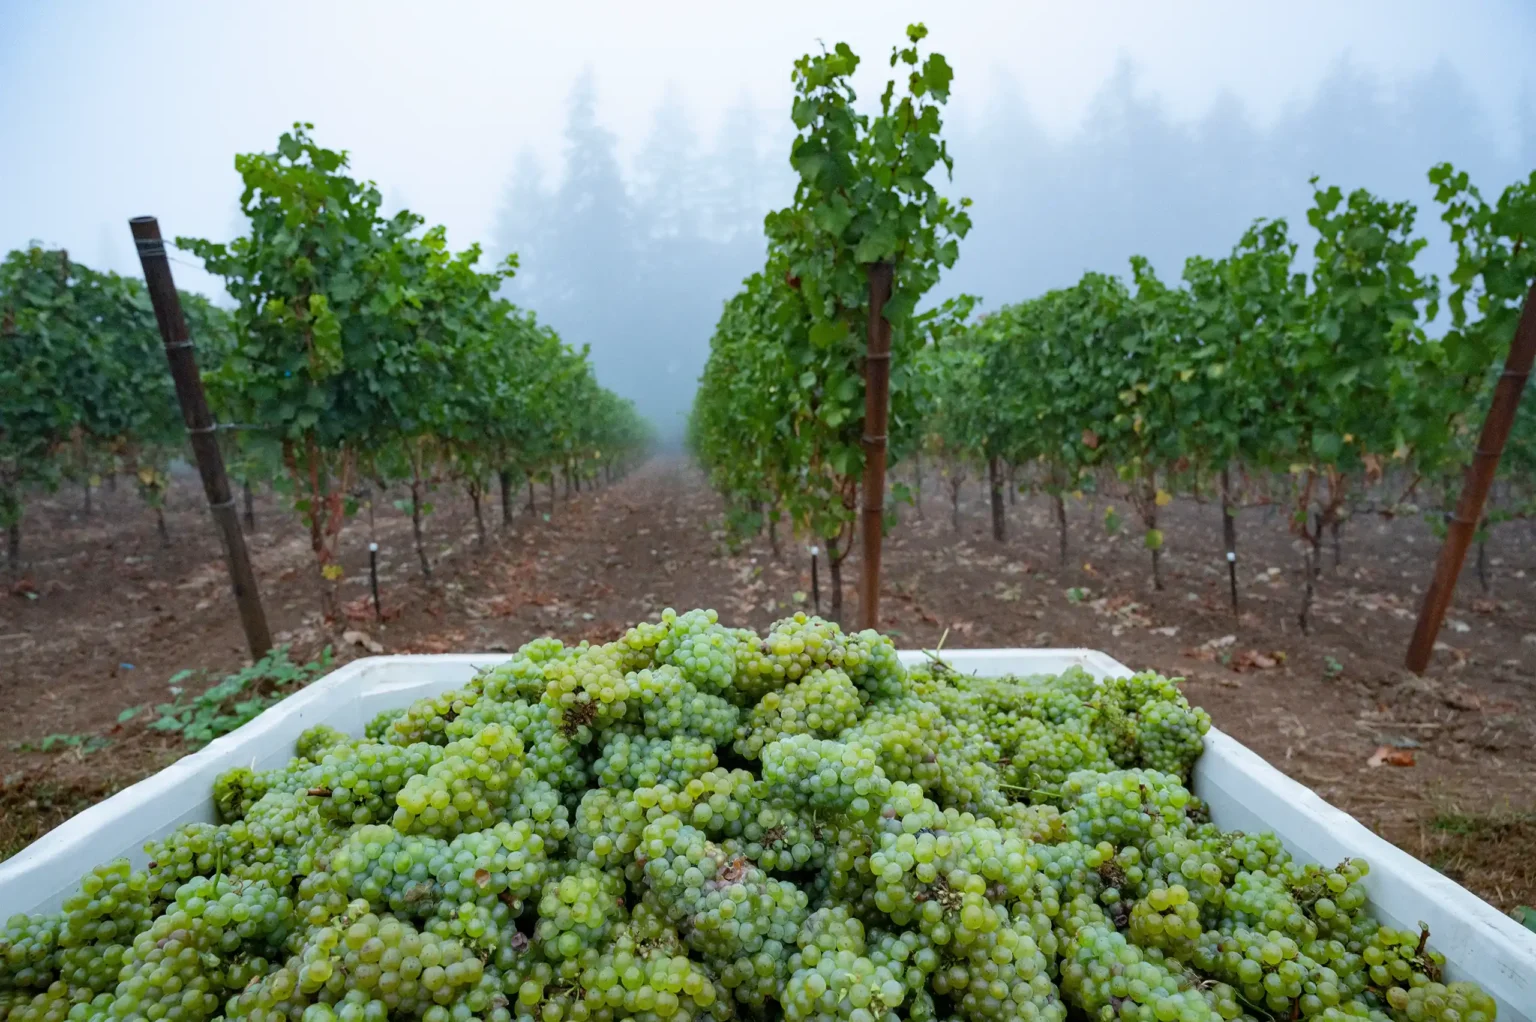 Grapes in vineyard at harvest